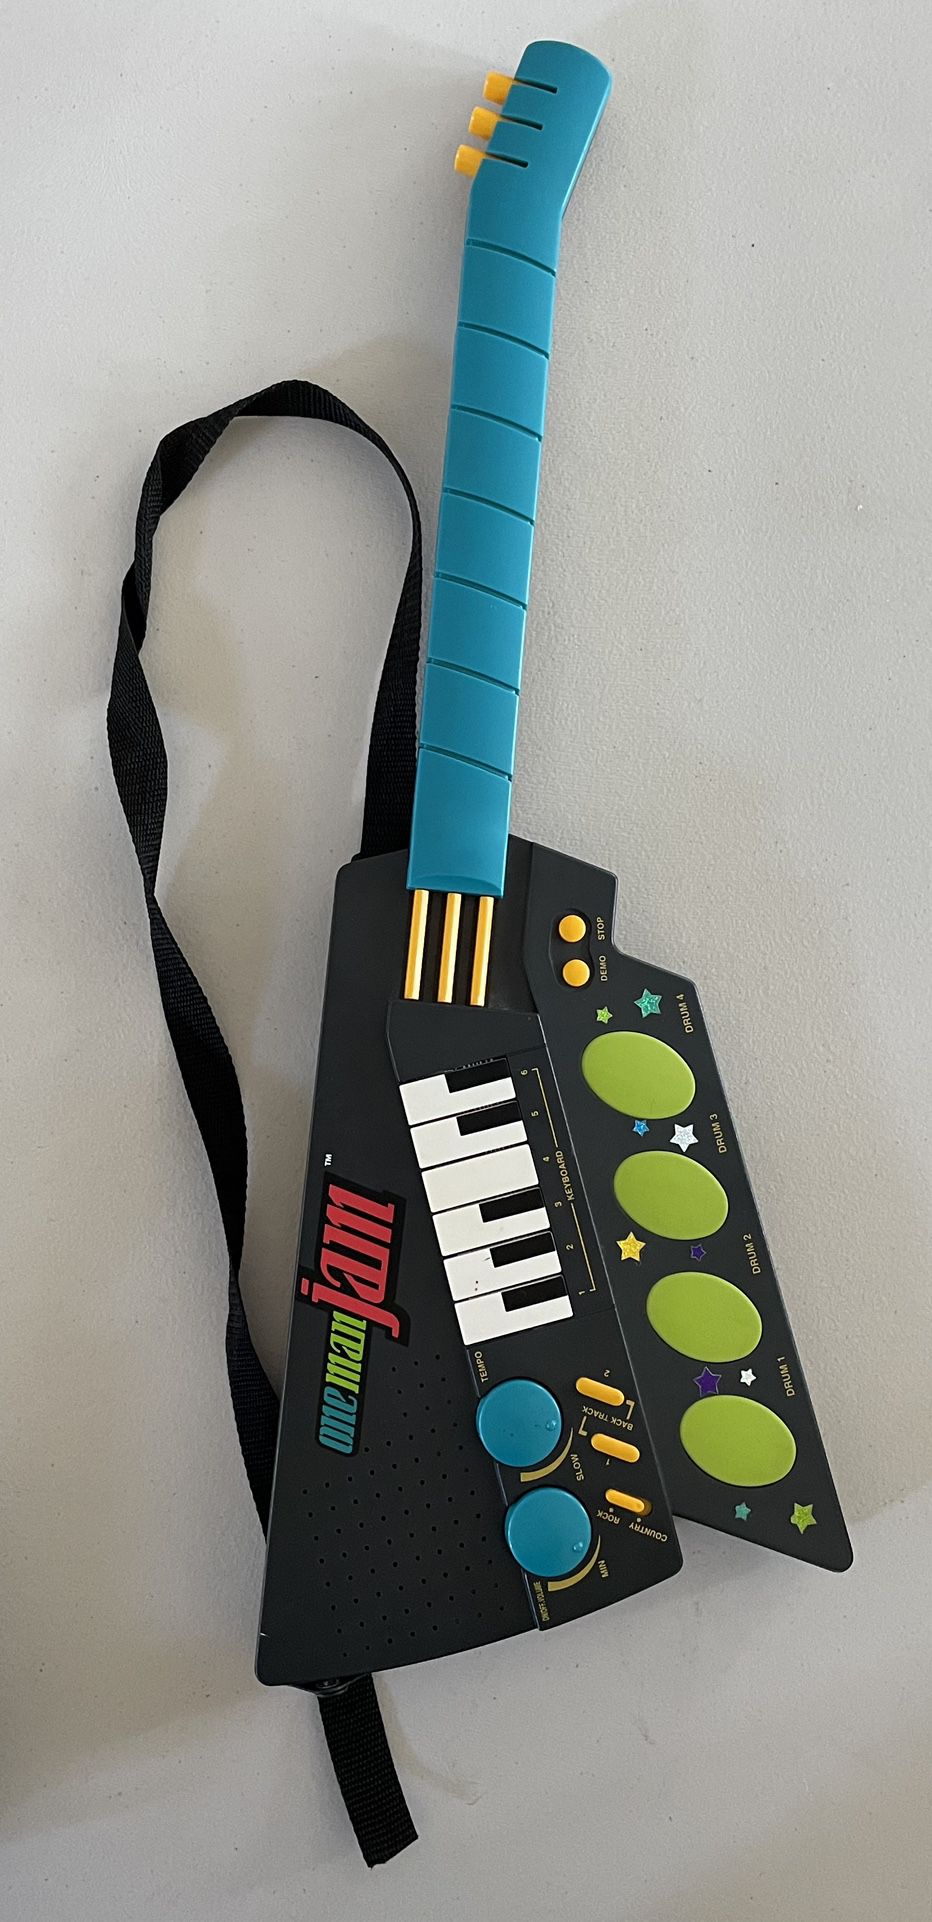 One Man Jam Electronic Guitar MGA 1996 Micro Games Vintage Musical Toy Keyboard